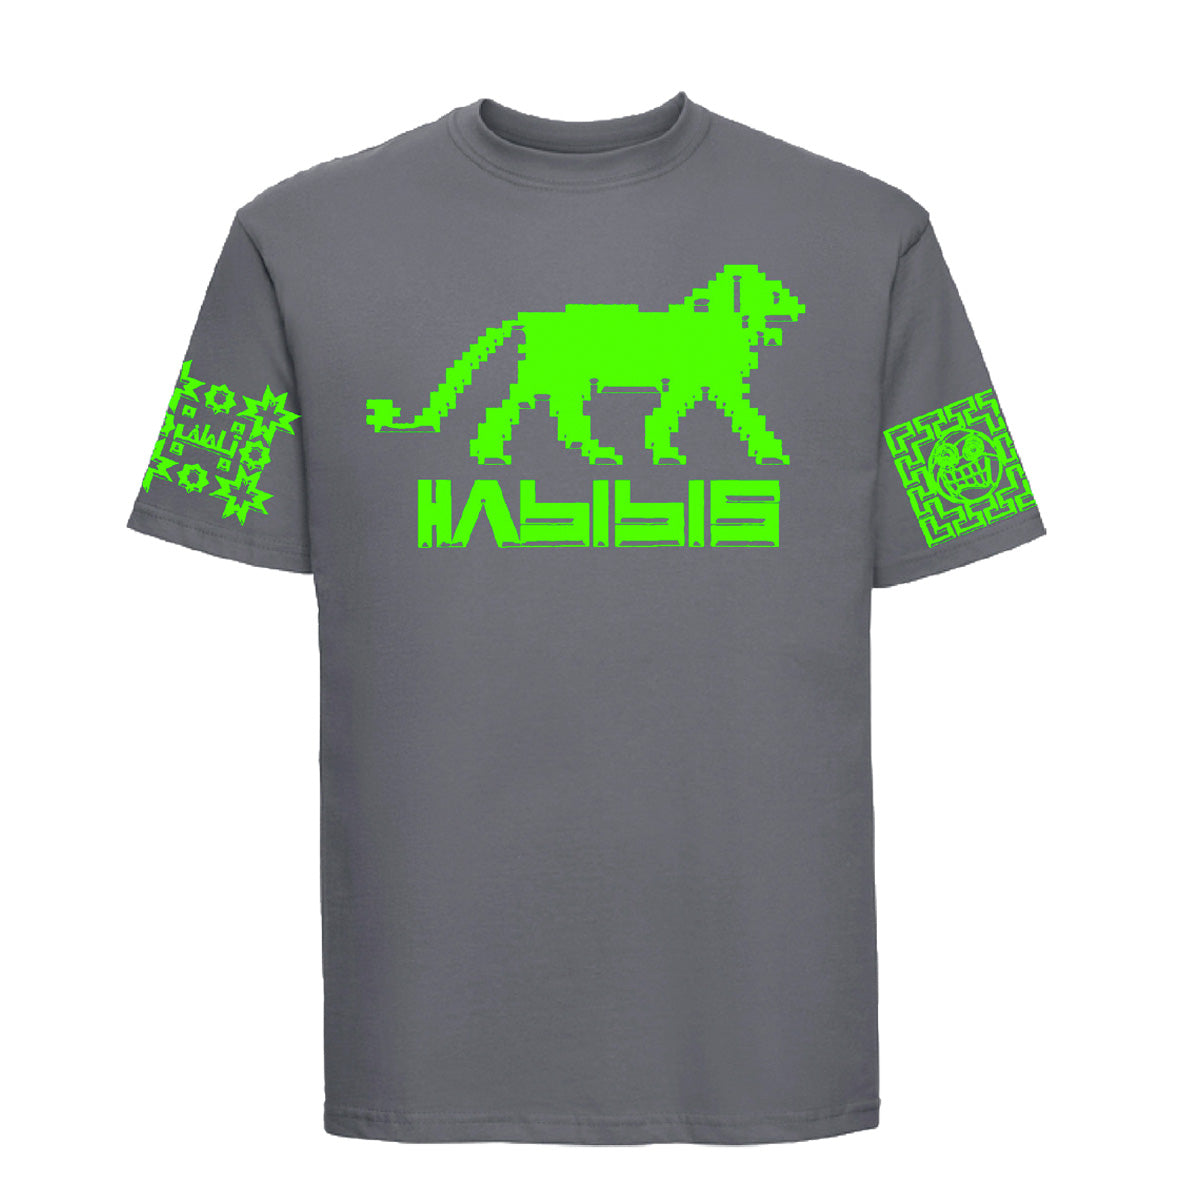 Habibis Lion T-shirt - Charcoal